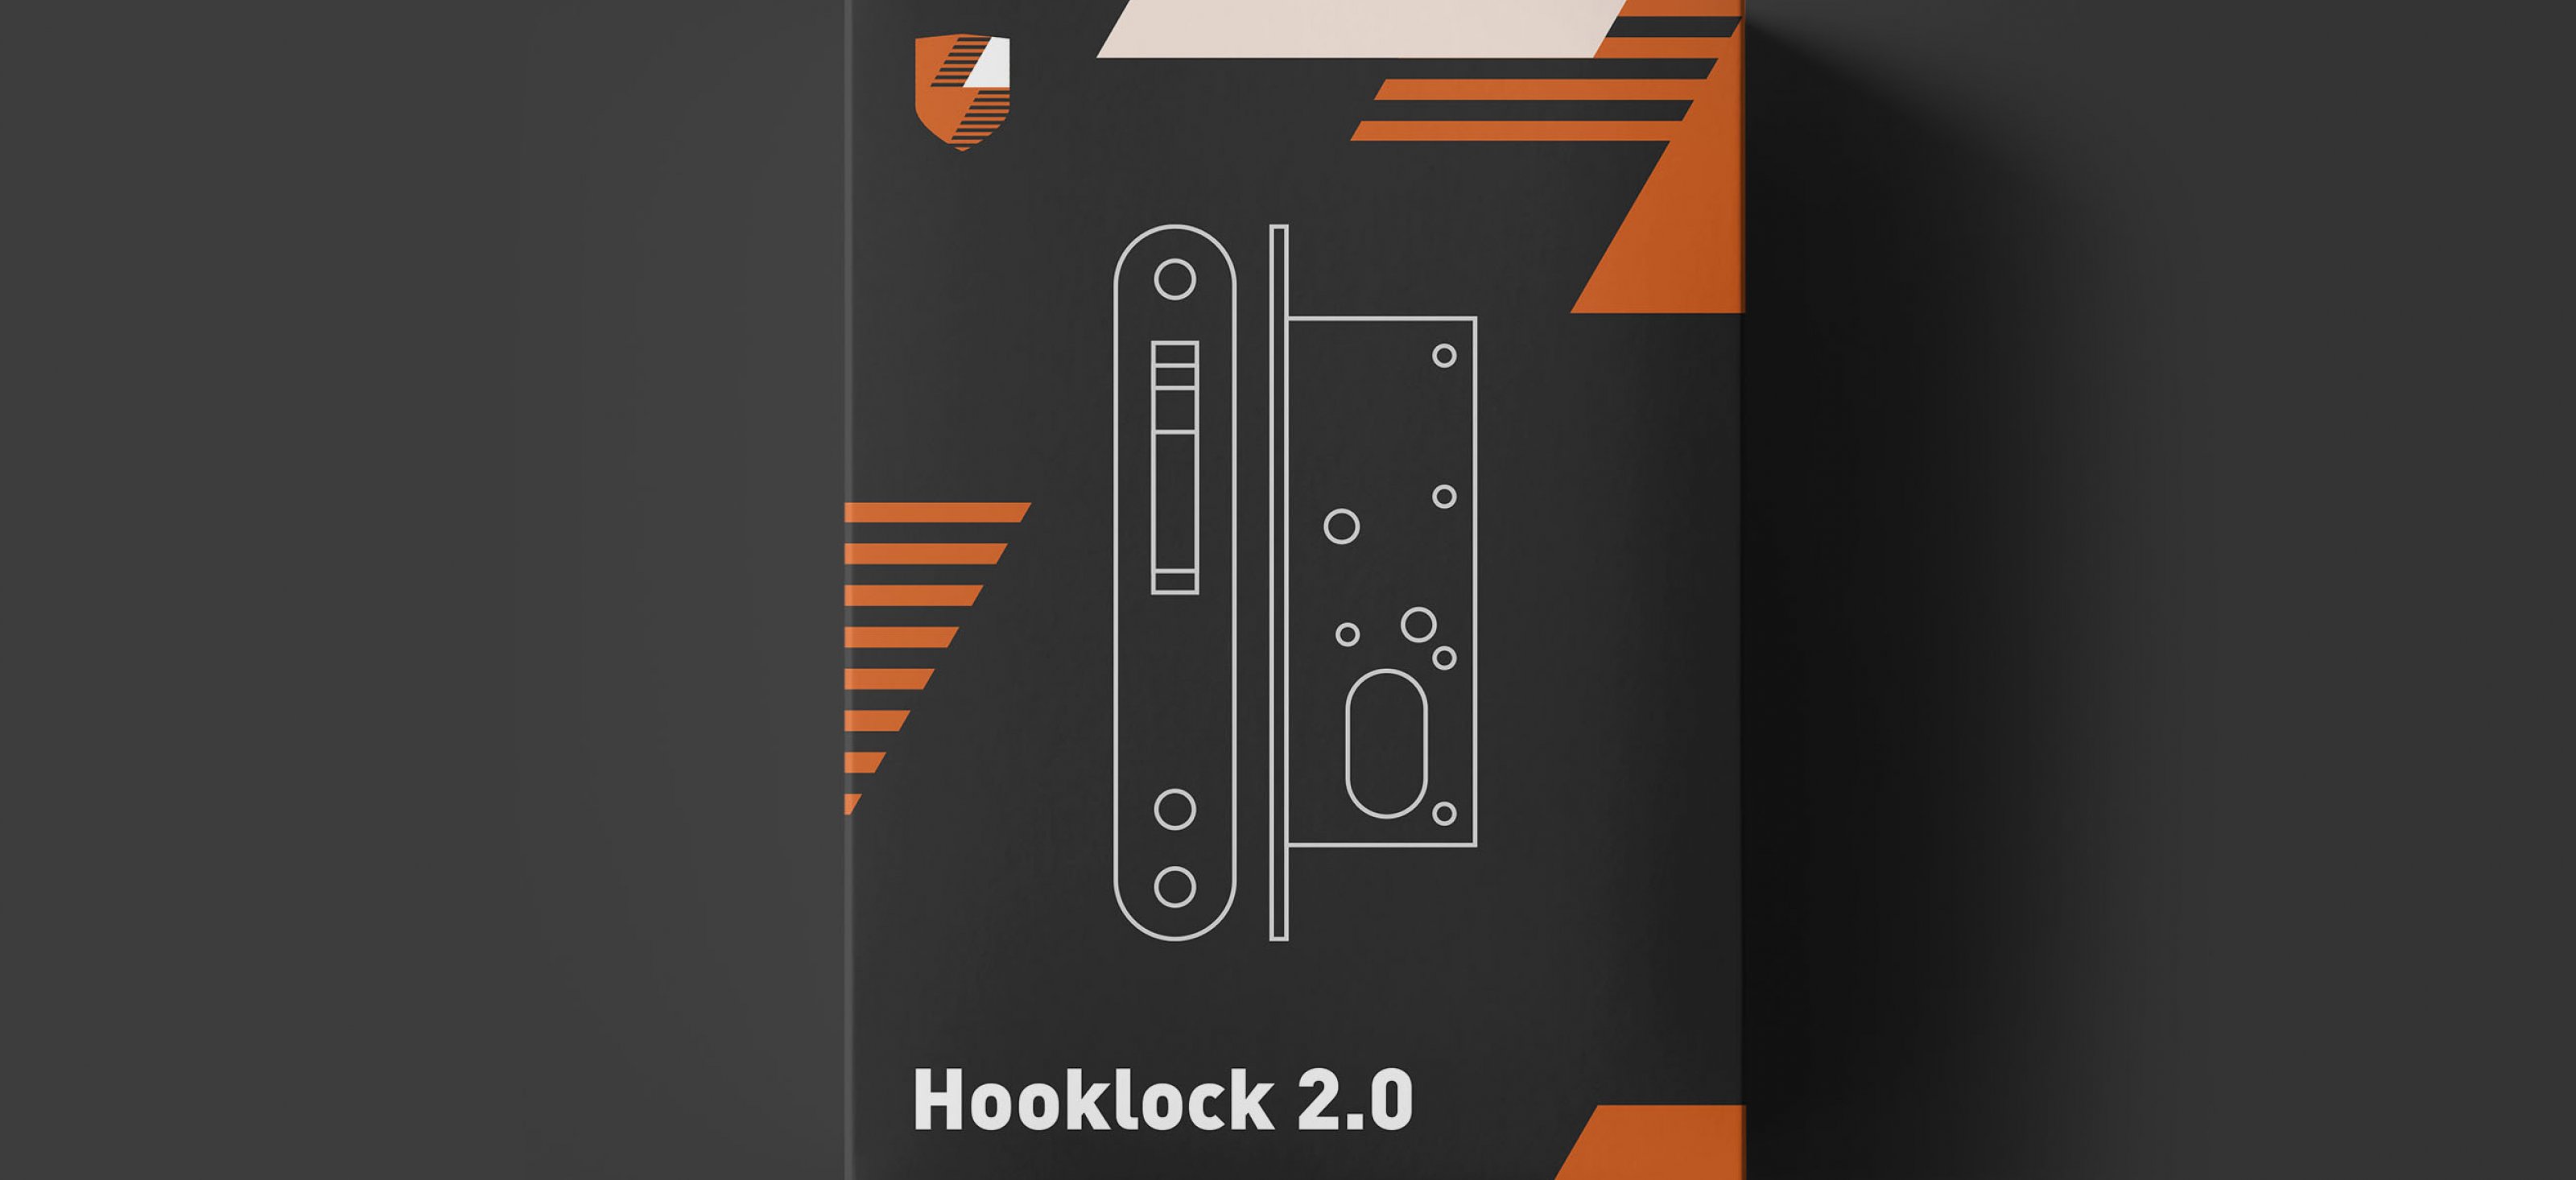 Introducing Hooklock 2.0: Smaller, sleeker, stronger